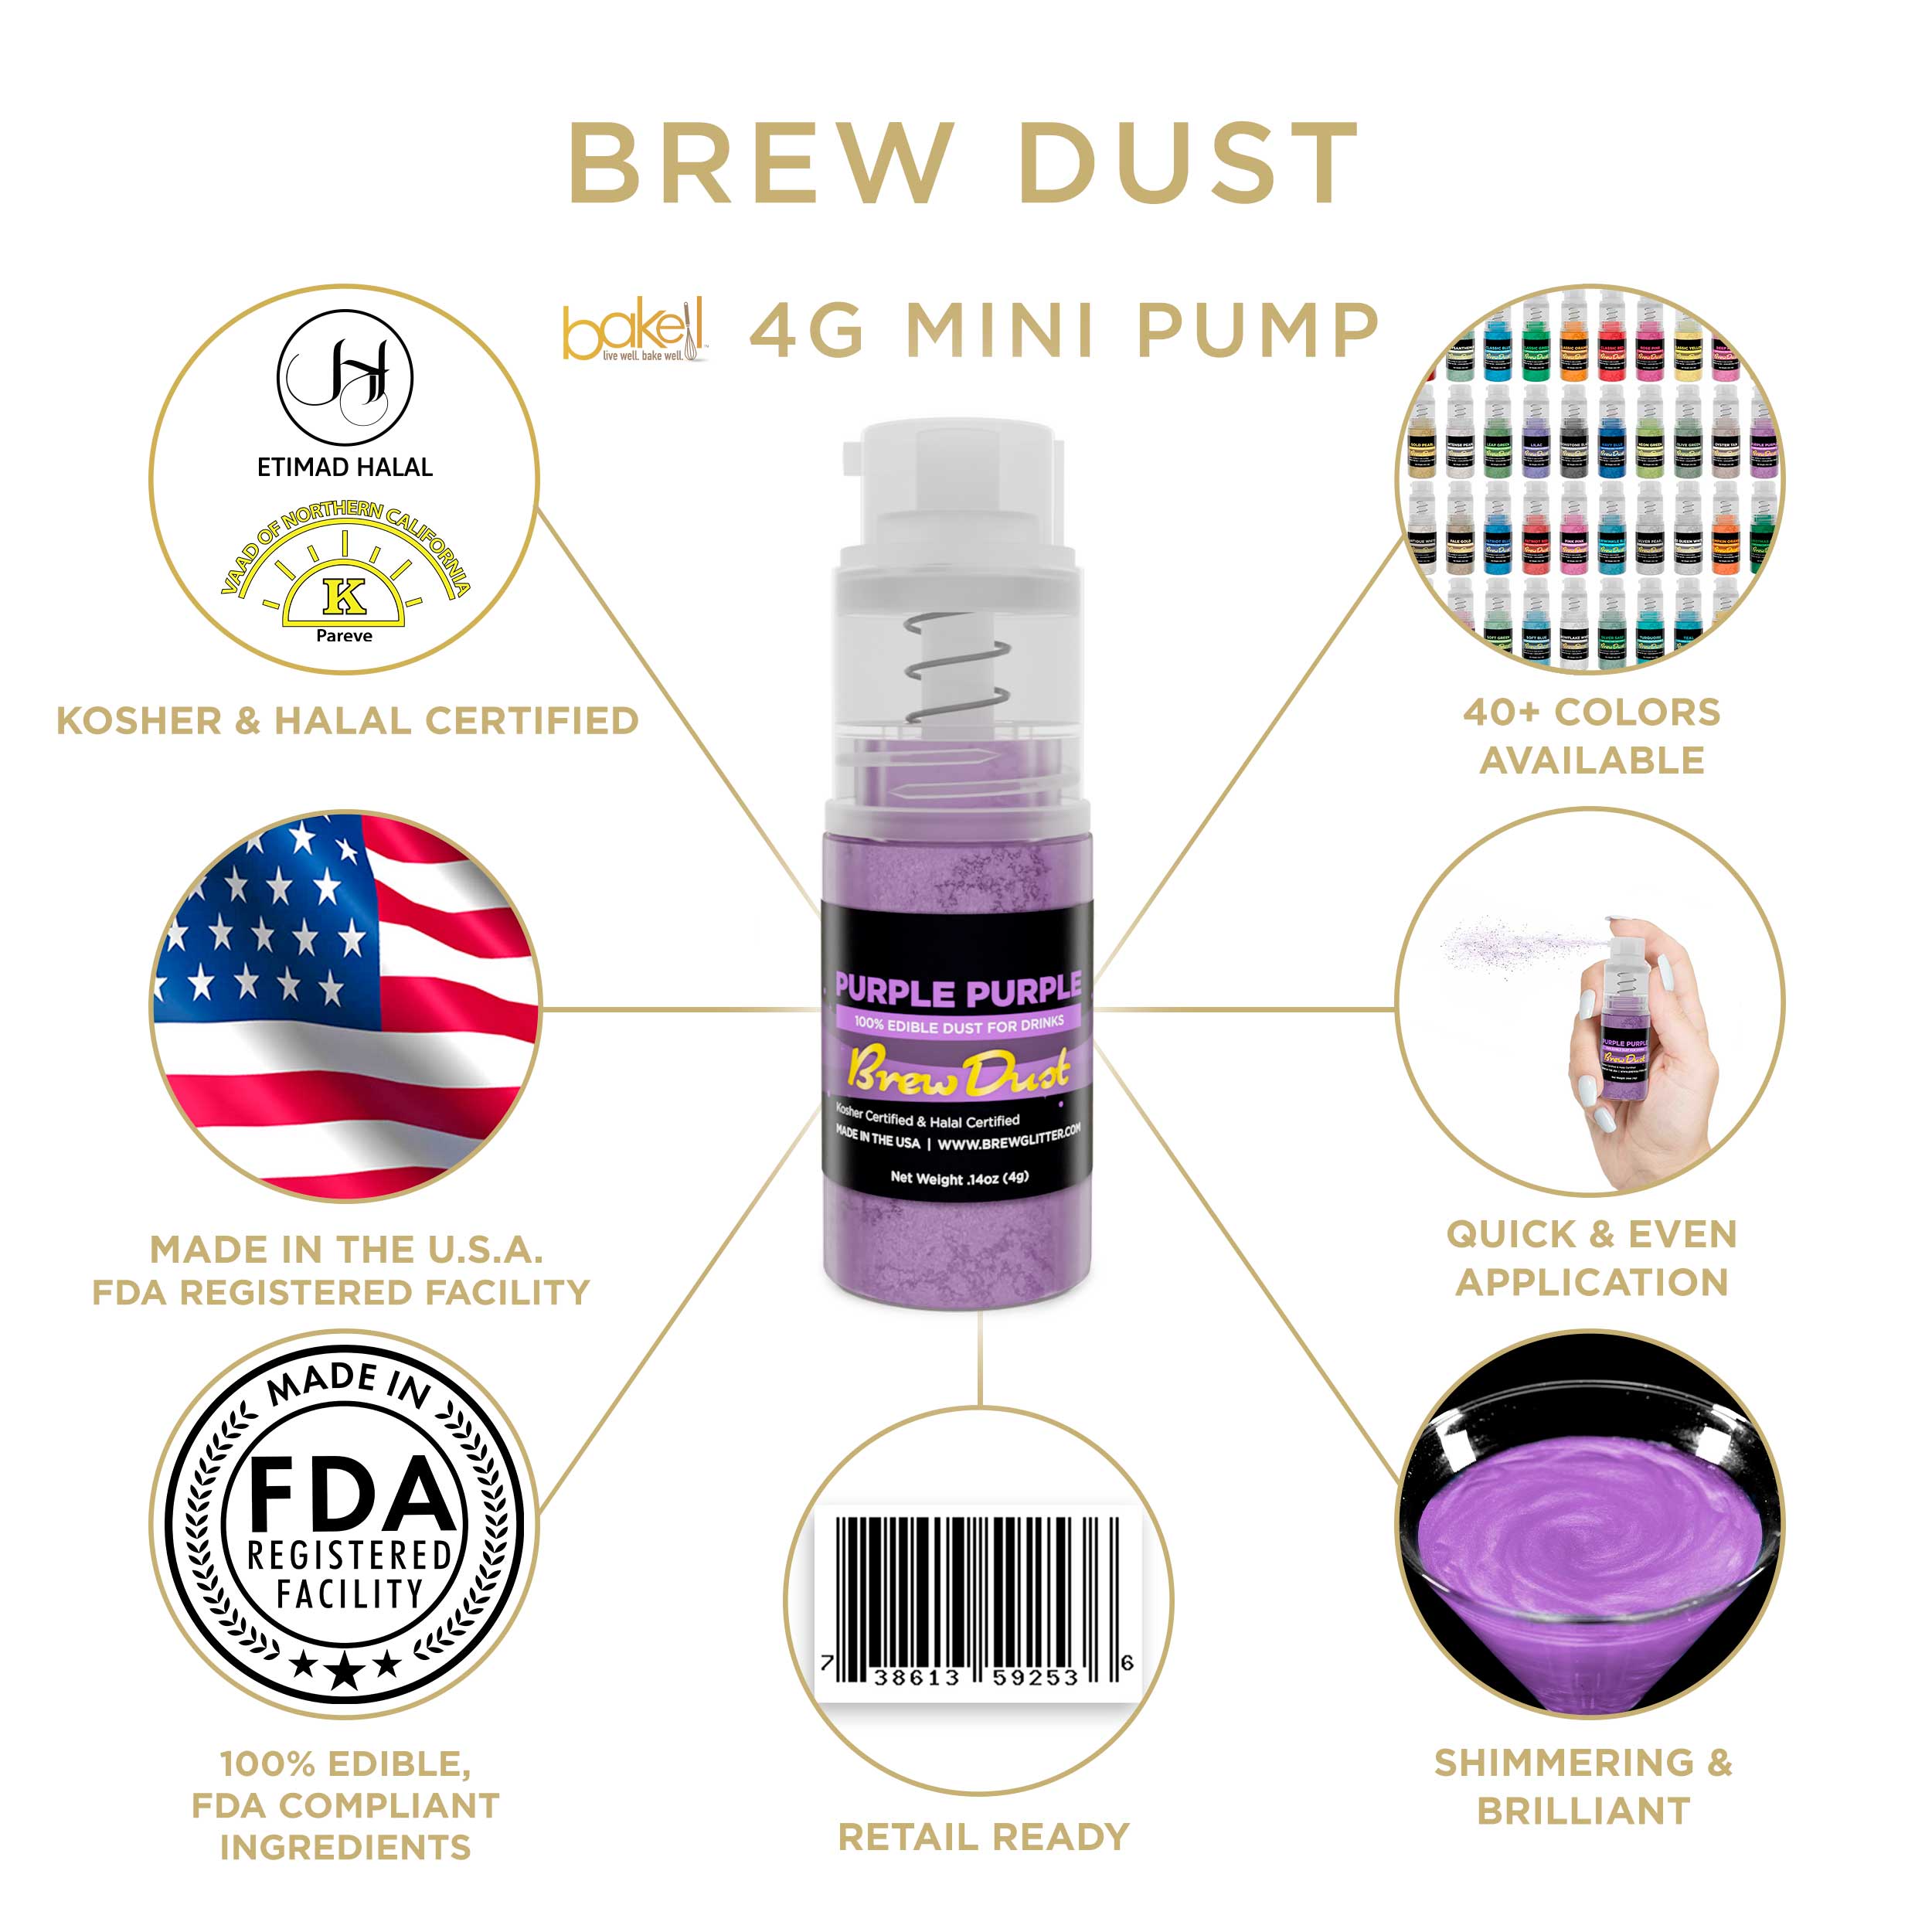 Purple Purple Brew Dust Miniature Spray Pump | Infographic and Information